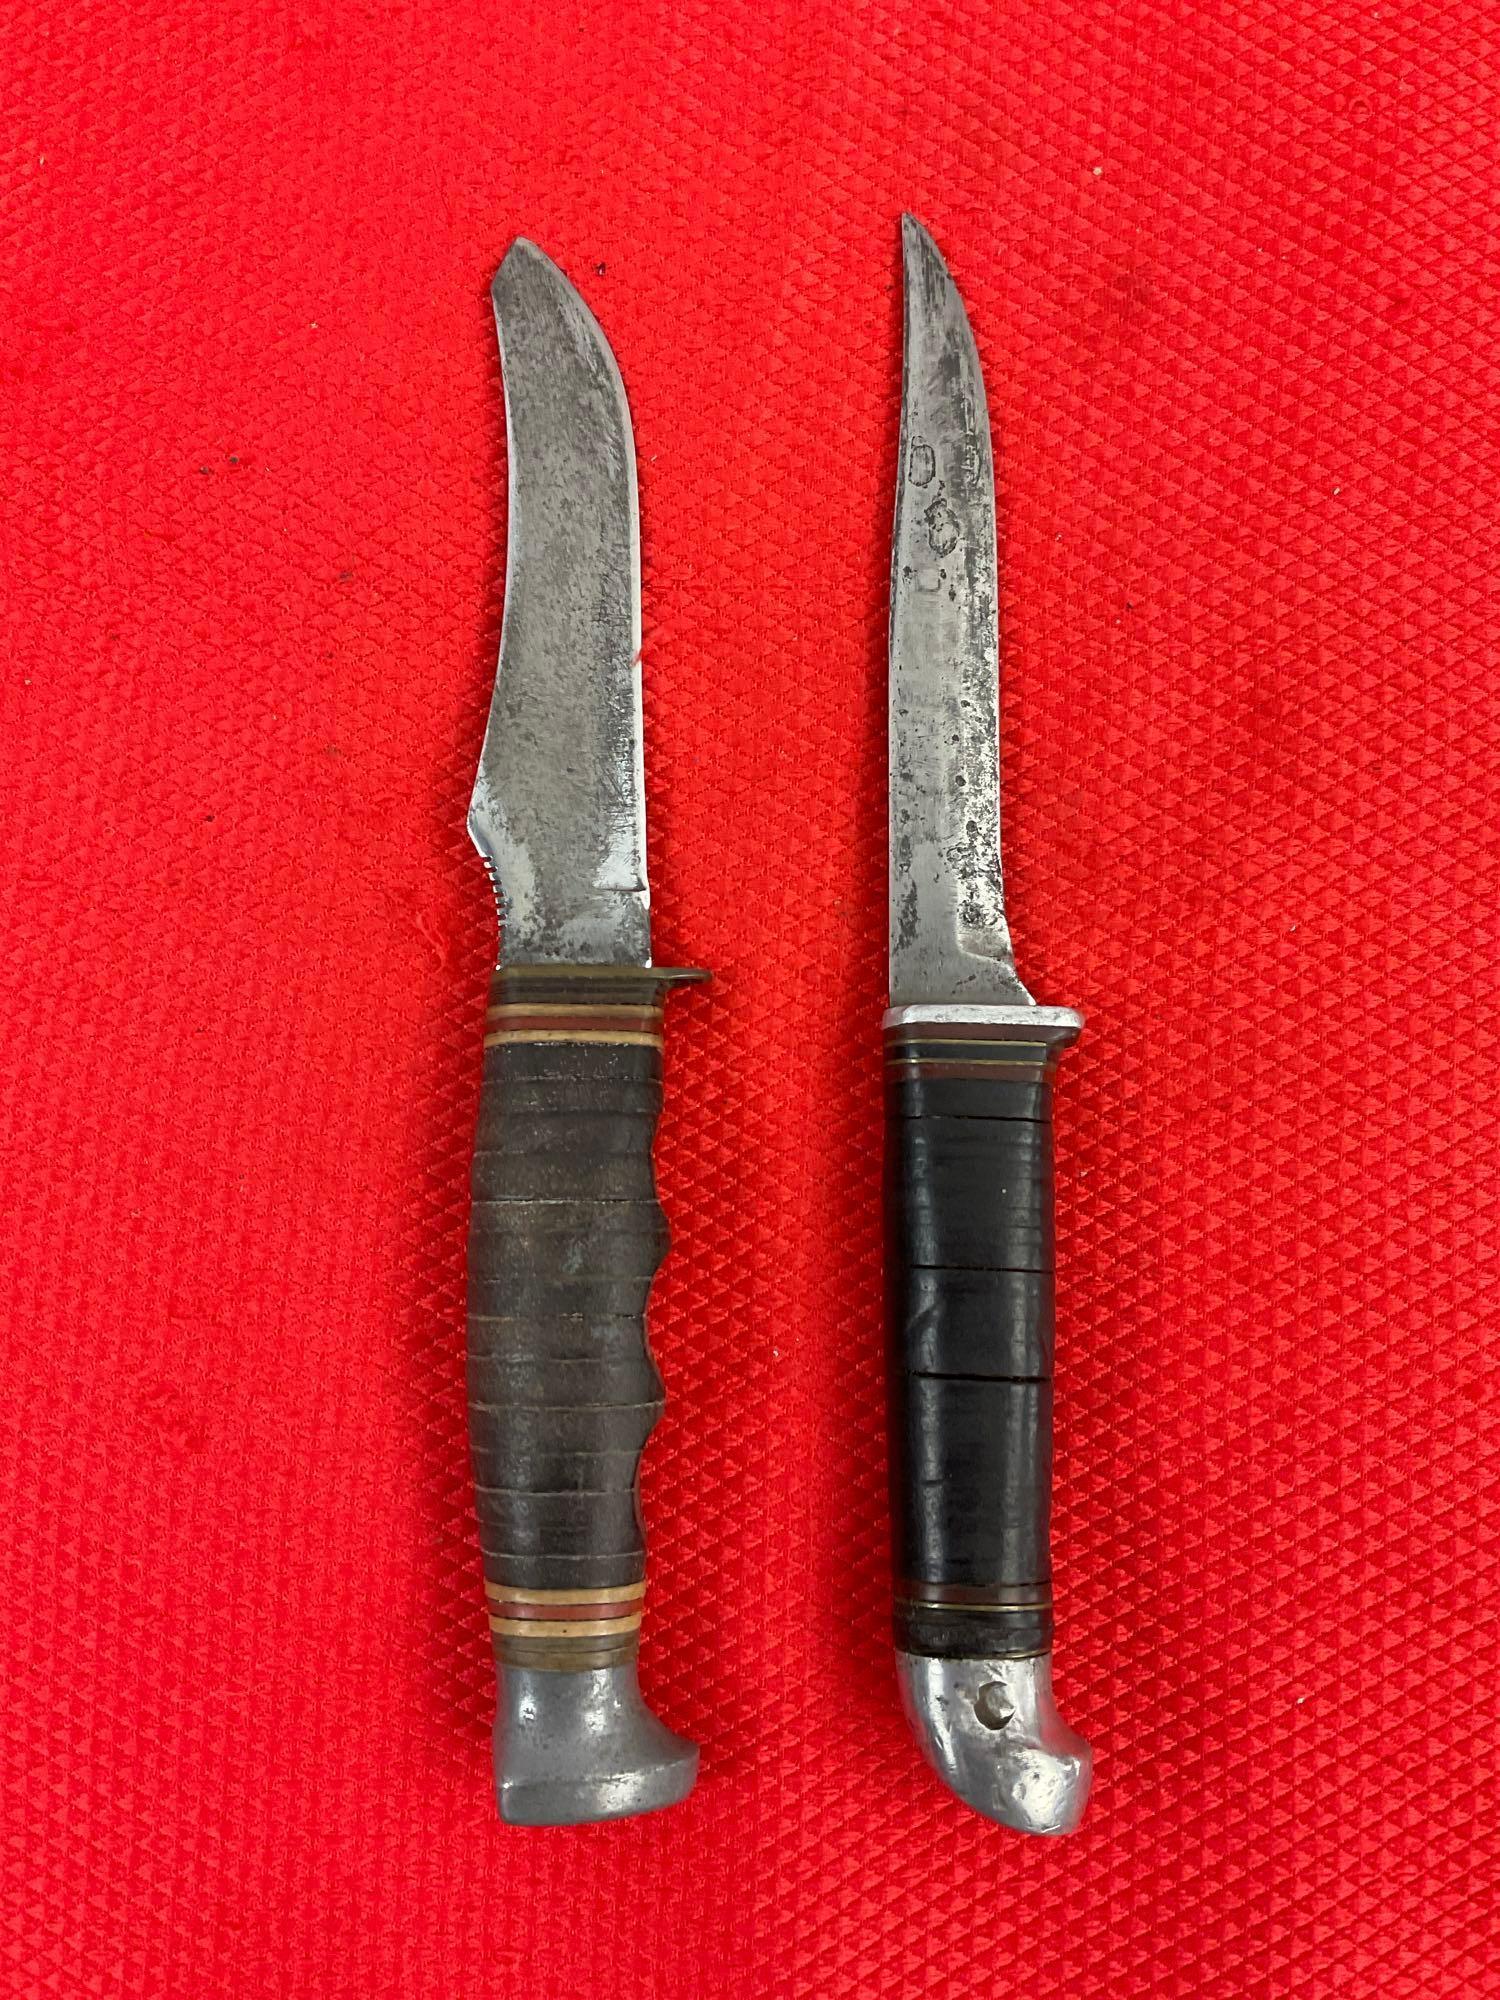 2 pcs Vintage Steel Fixed Blade Knives, 1 Kabar Model No 1233 & 1 Unnumbered Kinfolks. See pics.